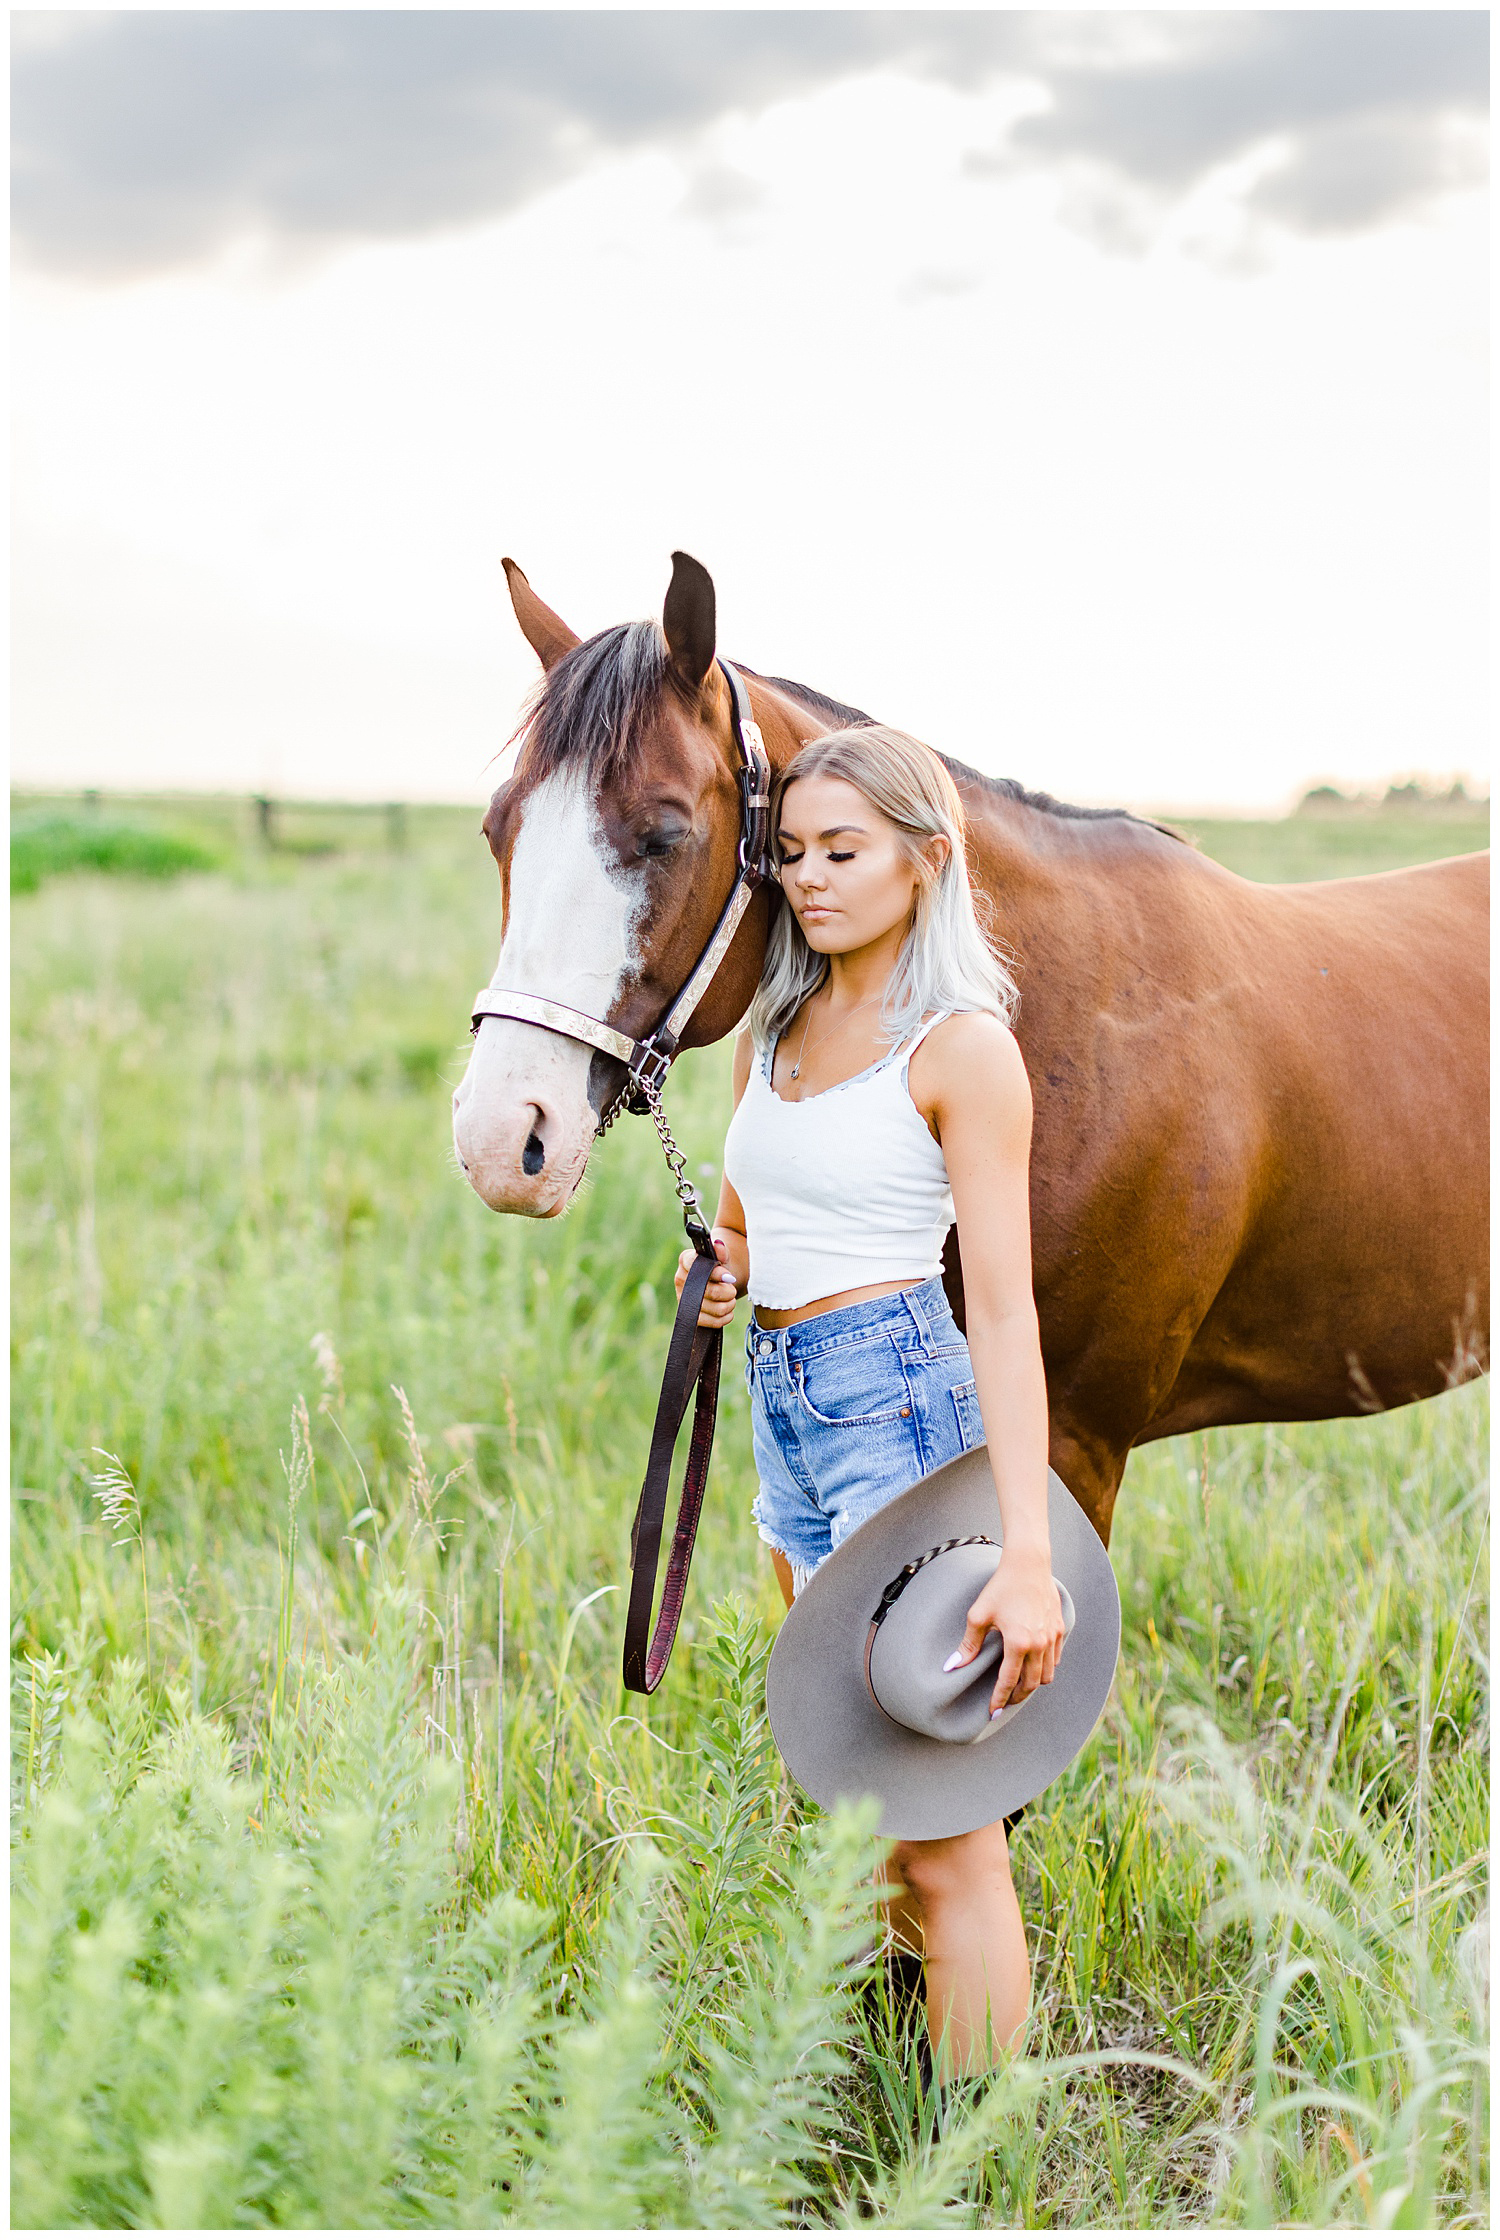 Addison snuggles Miss Flirty the horse in a grassy field | CB Studio